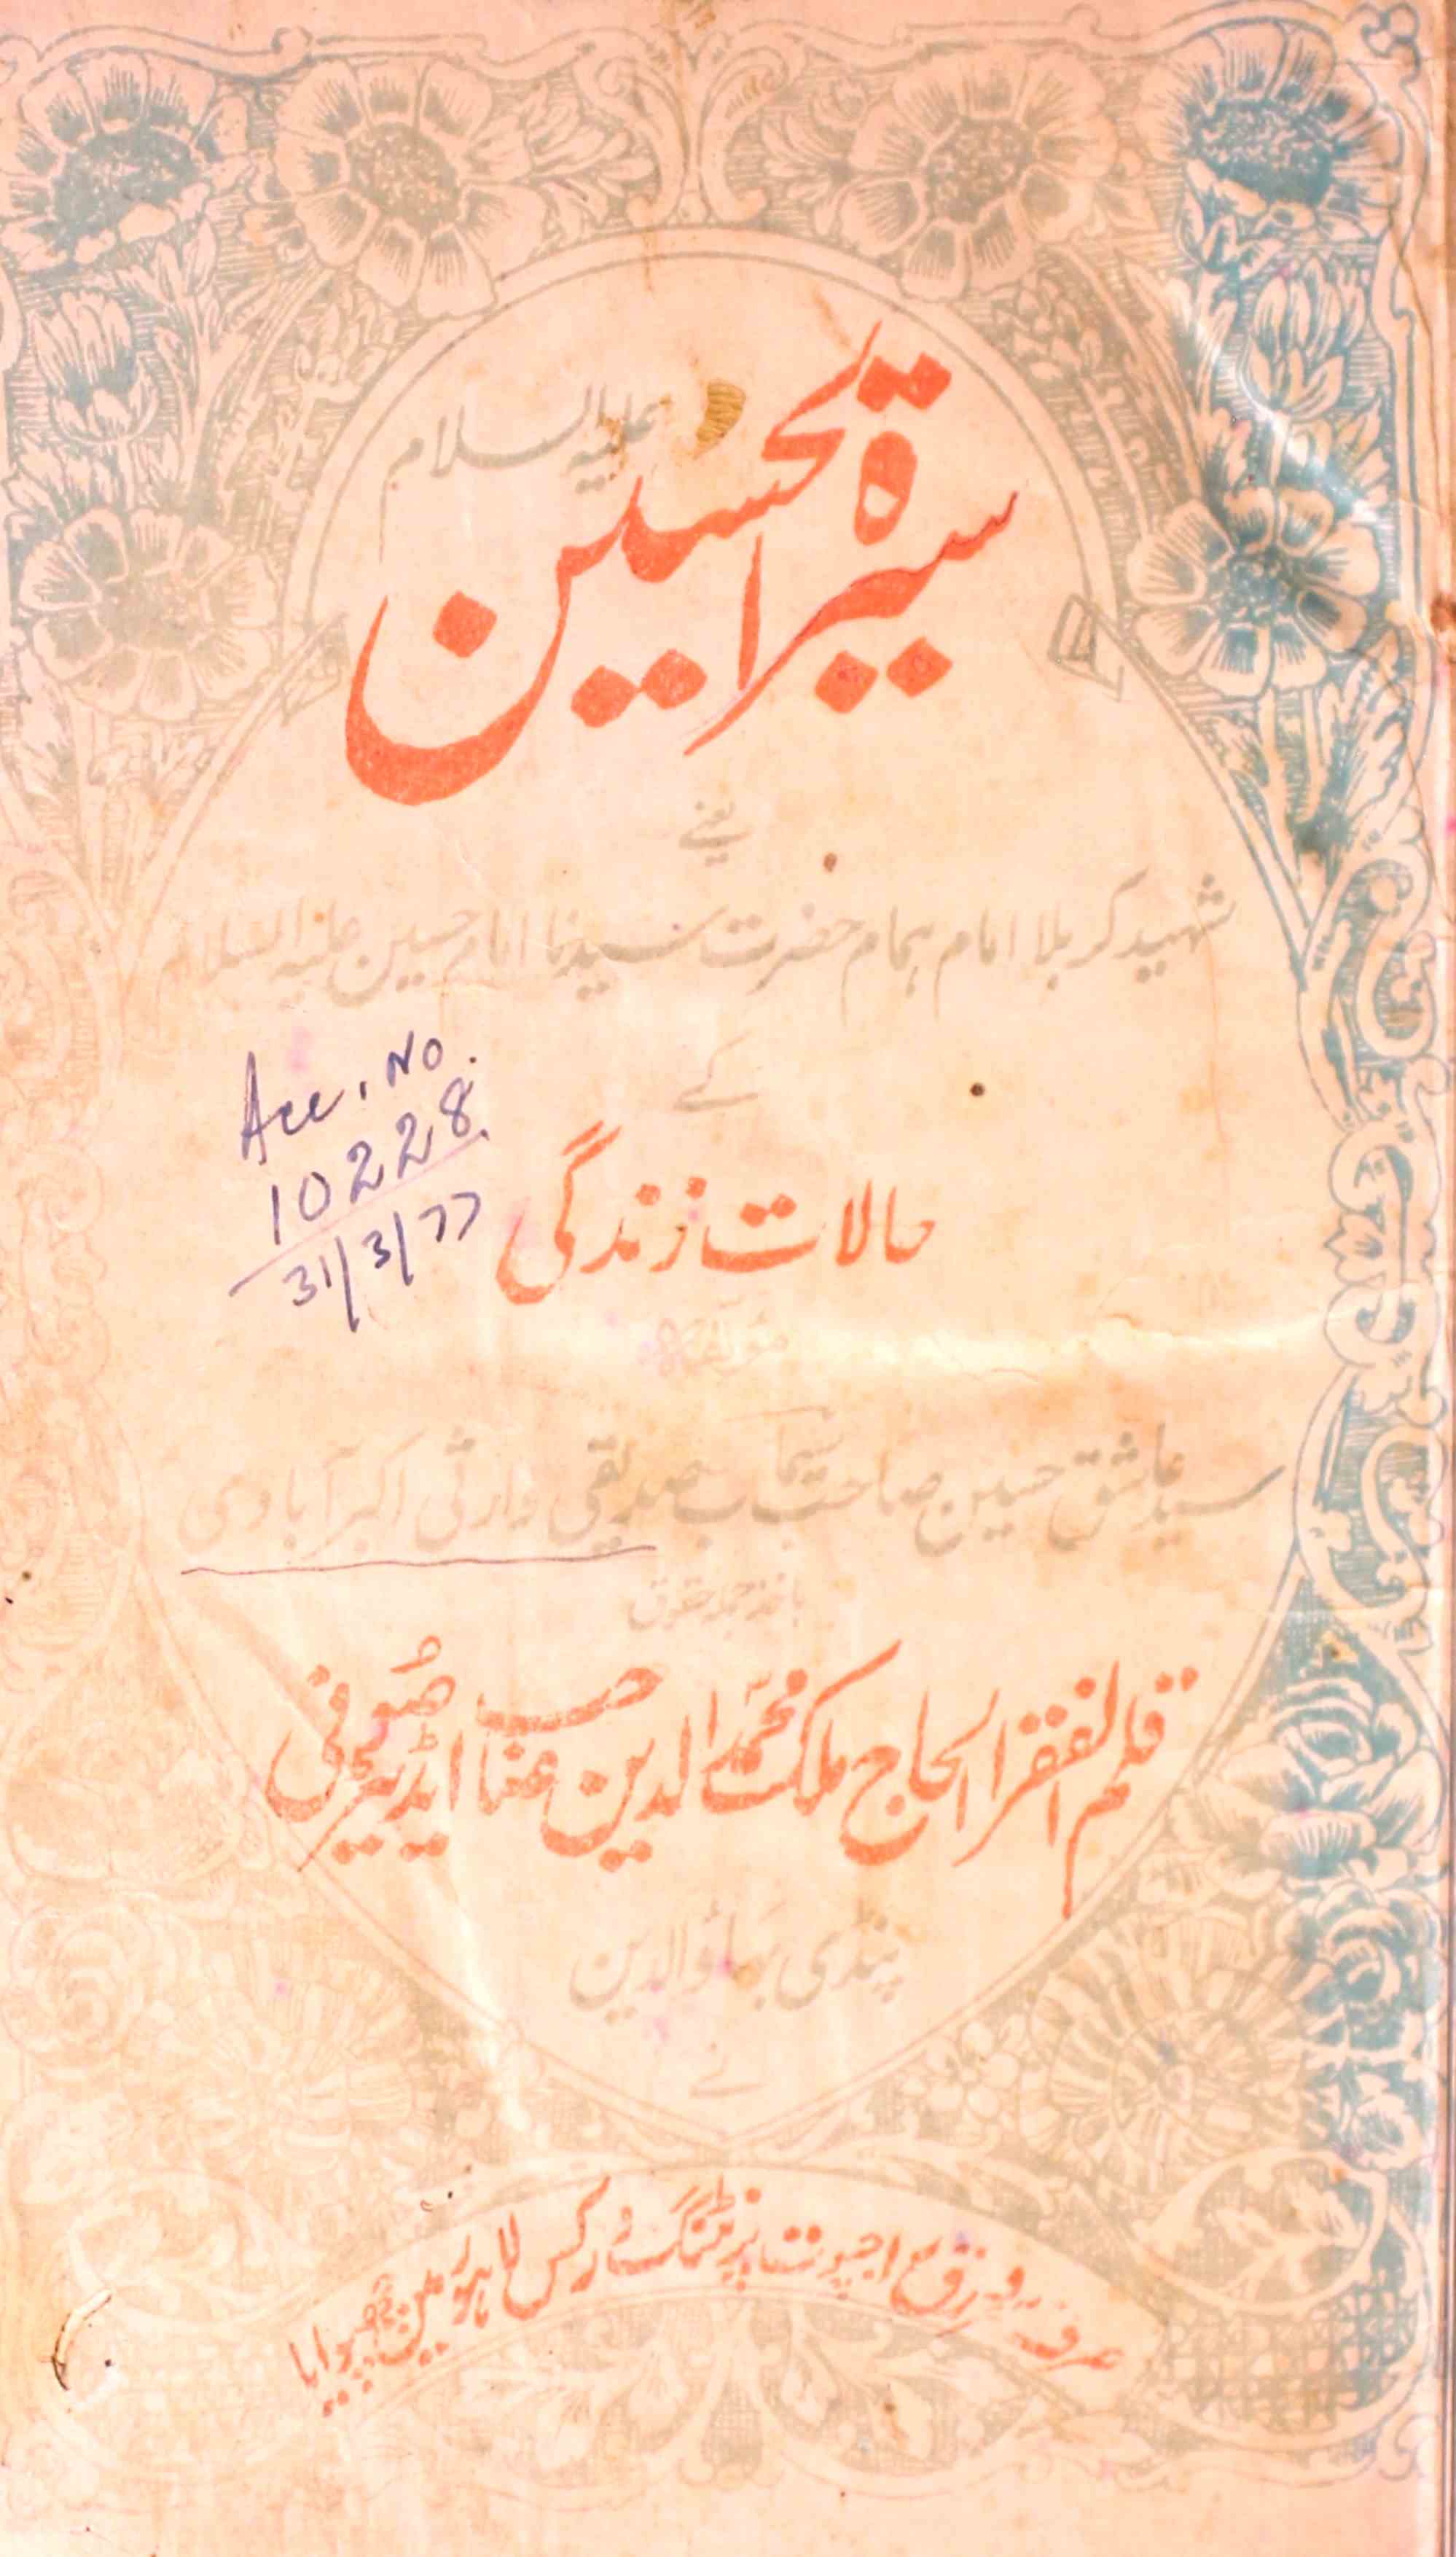 Seerat-ul-Husain